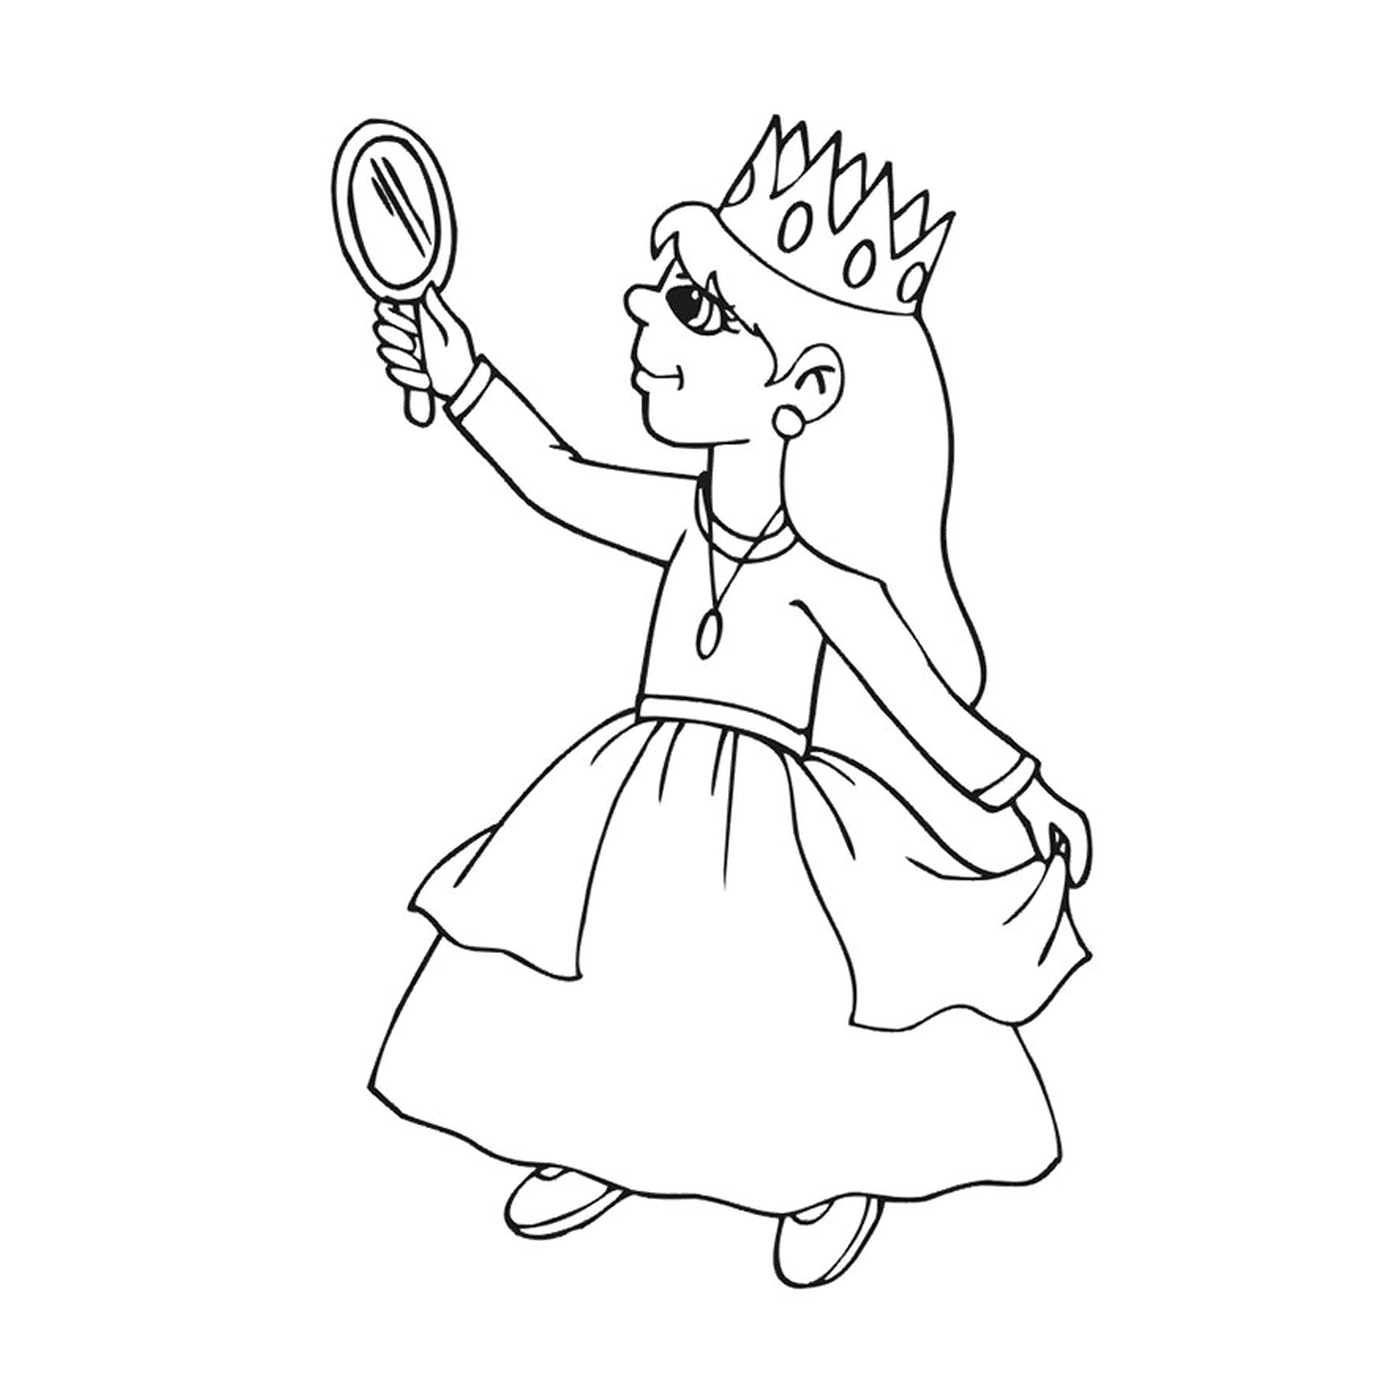  Принцесса, держащая зеркало 